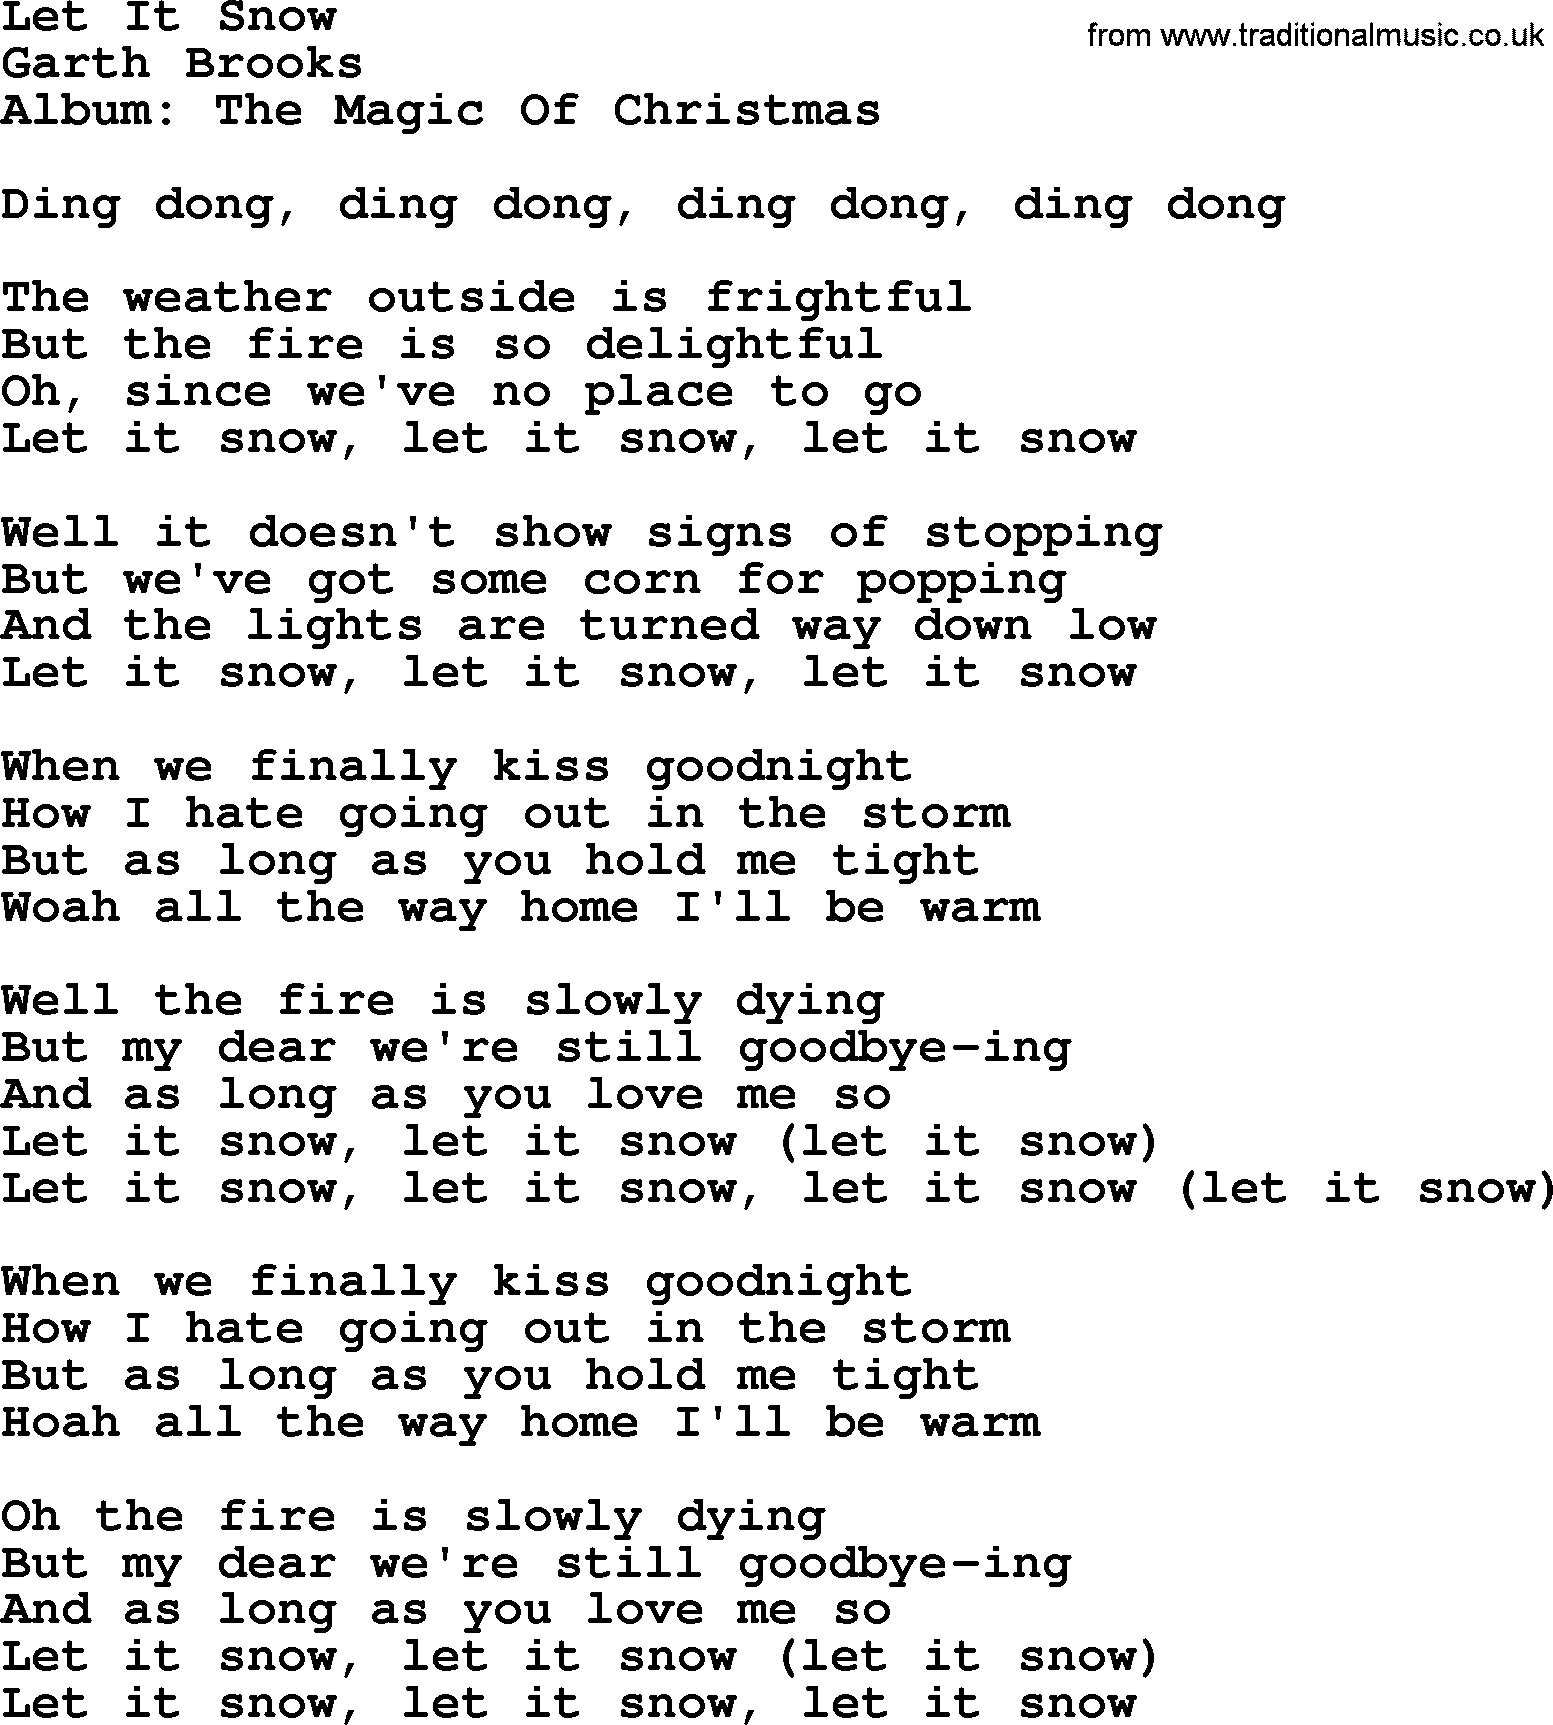 Garth Brooks song: Let It Snow, lyrics